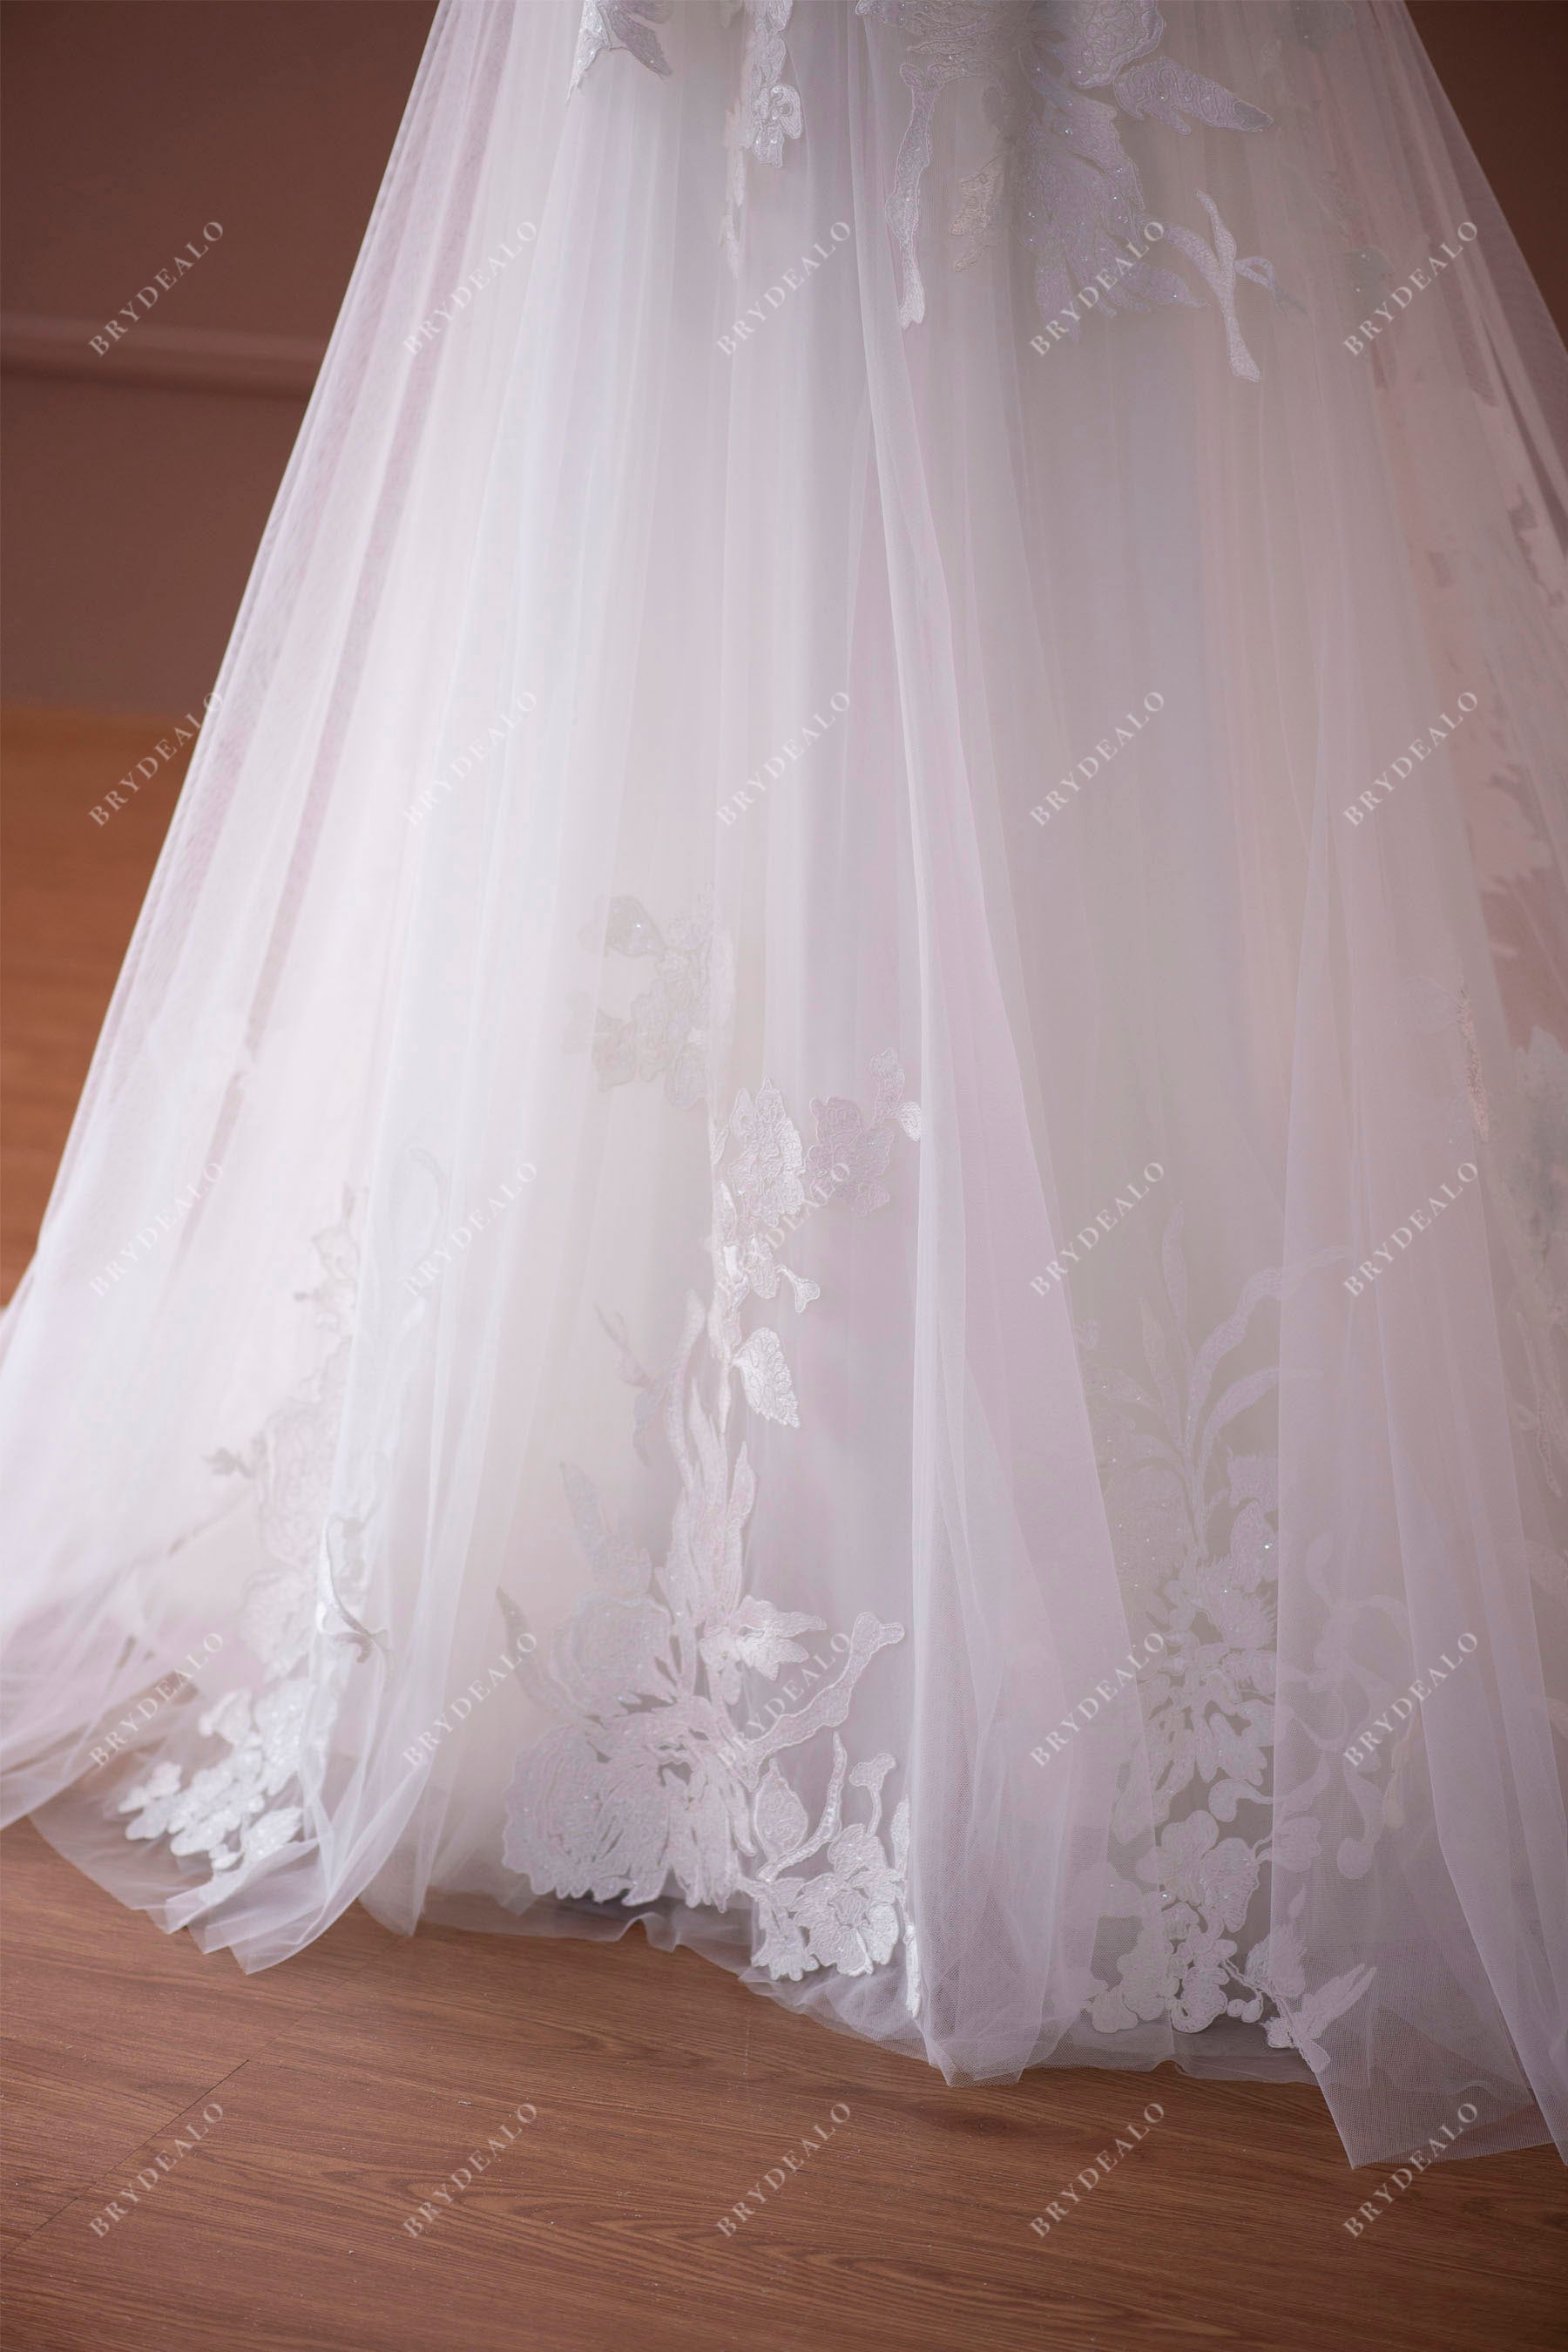 shimmery flower lace white garden wedding dress